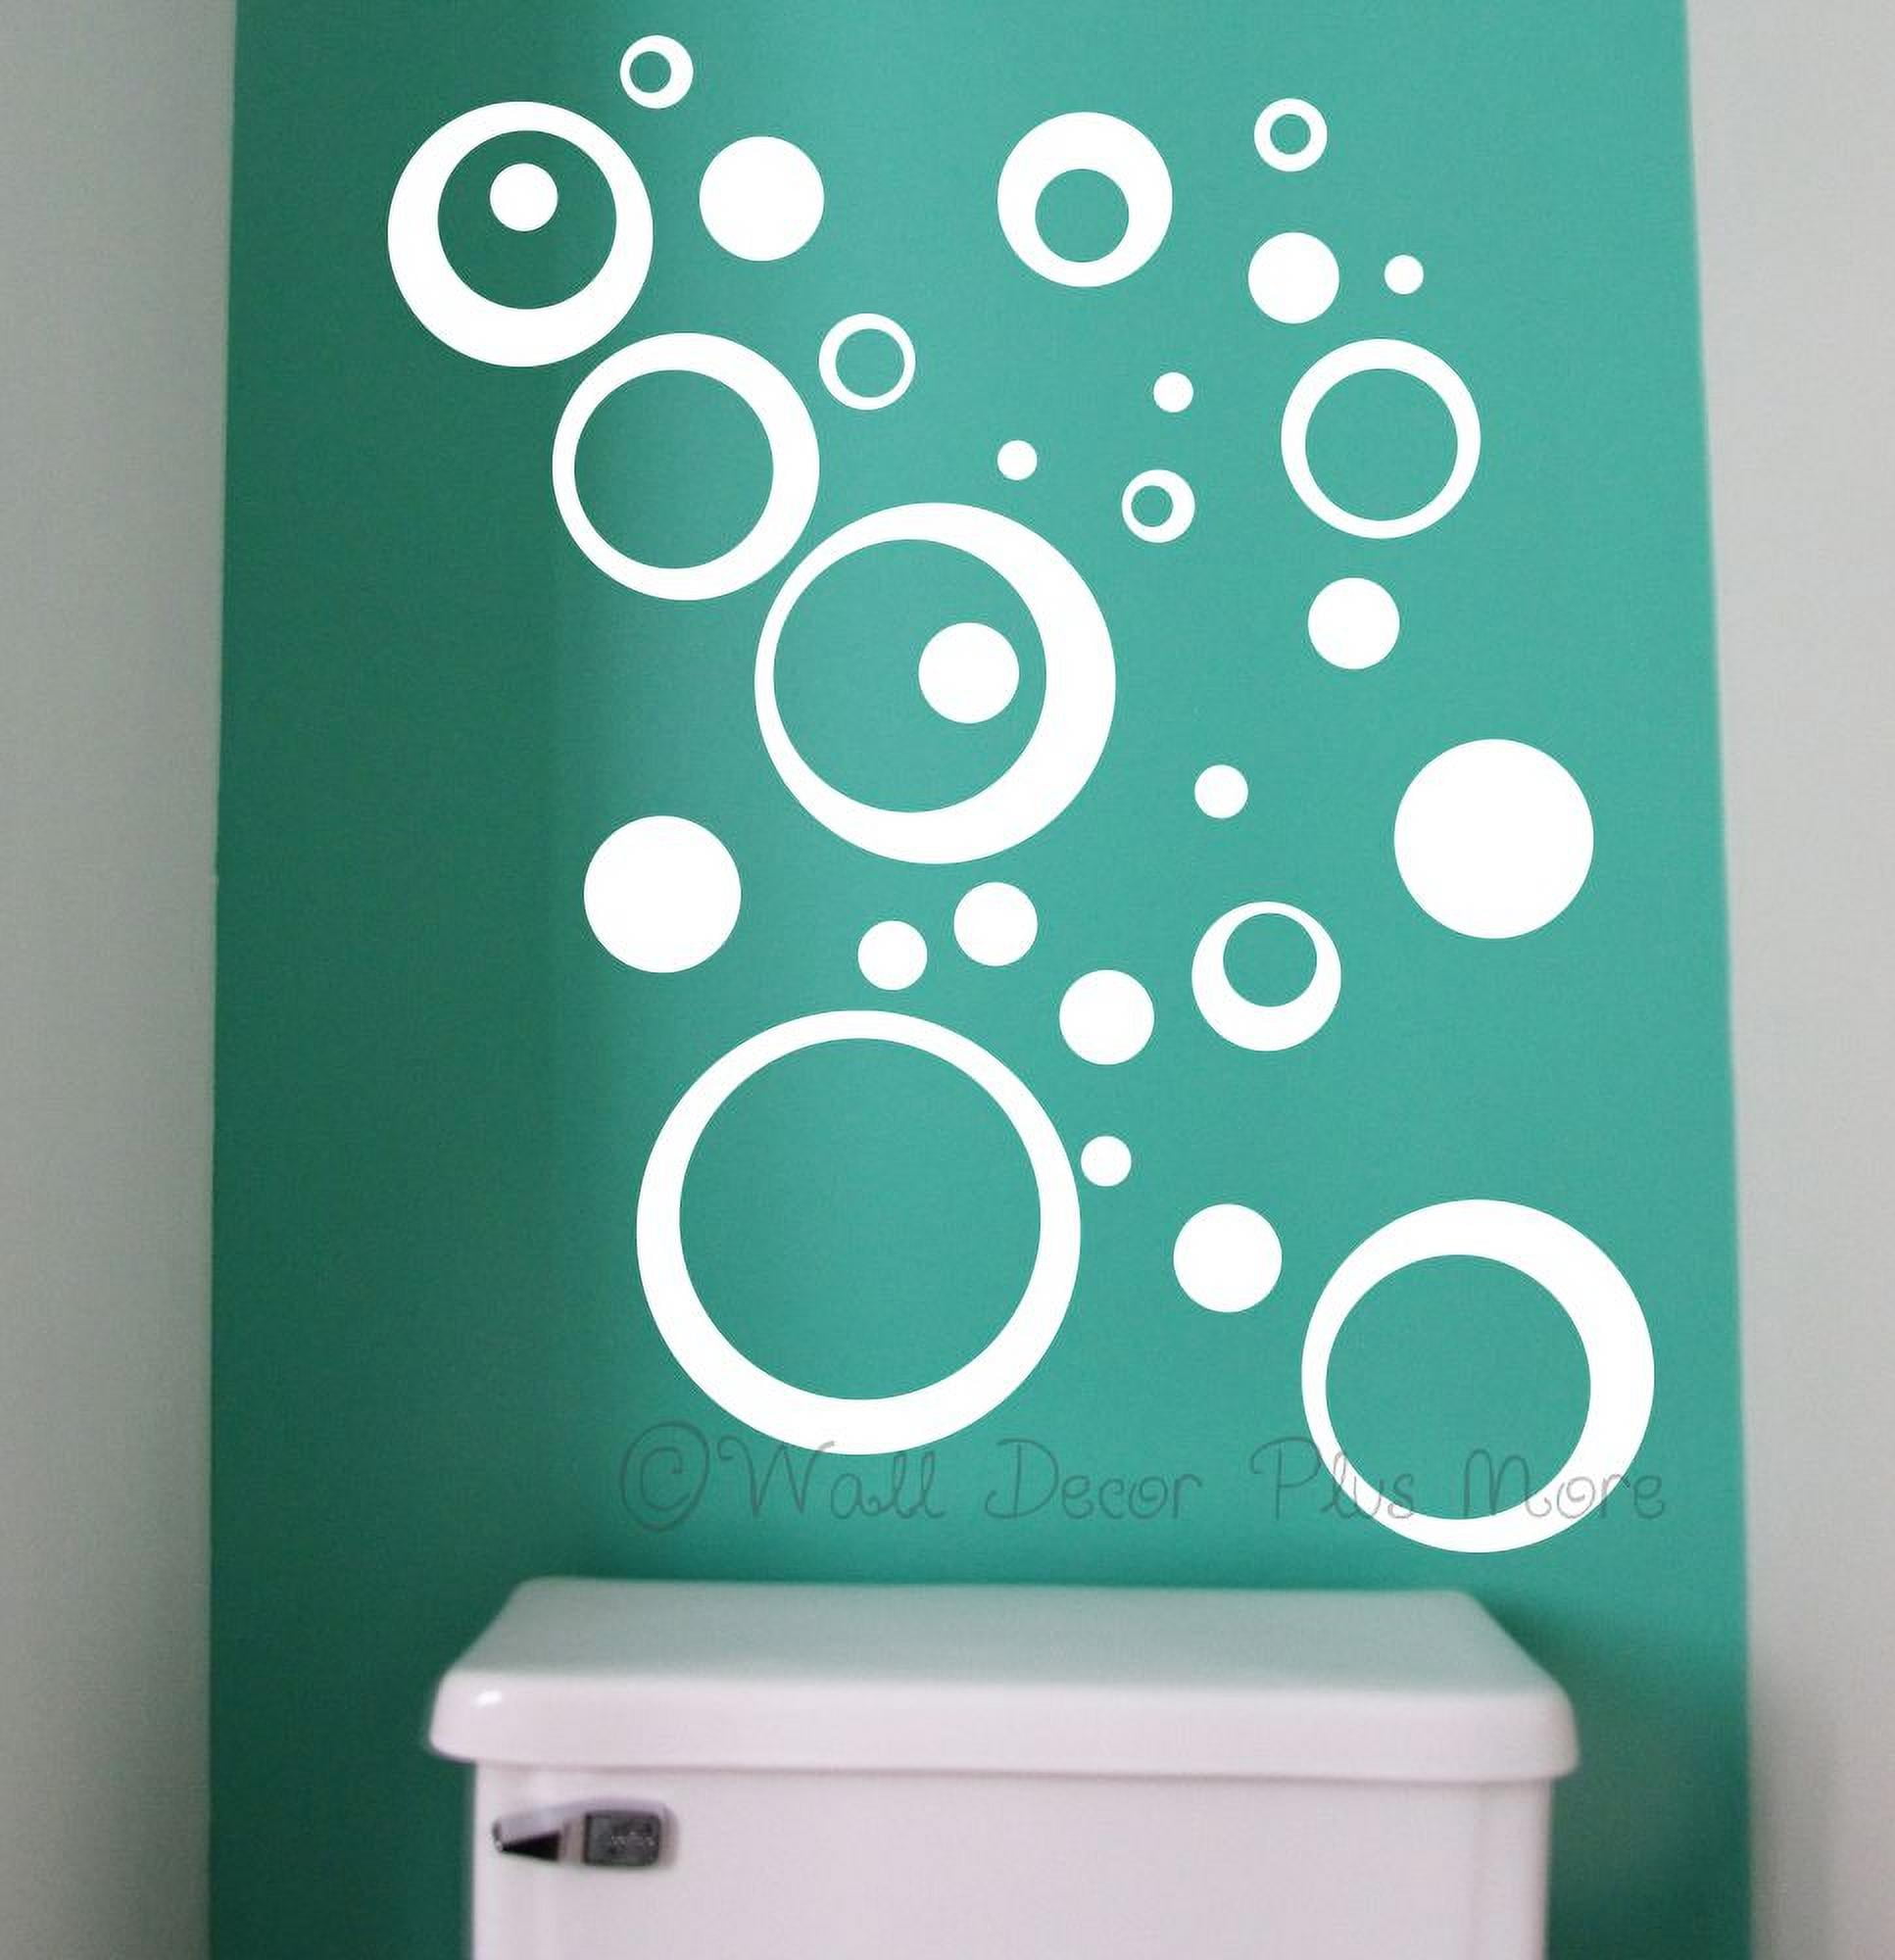 25Pc Self Adhesive Tile Art Wall Decal Sticker Kitchen Bathroom Door Decor Vinyl 